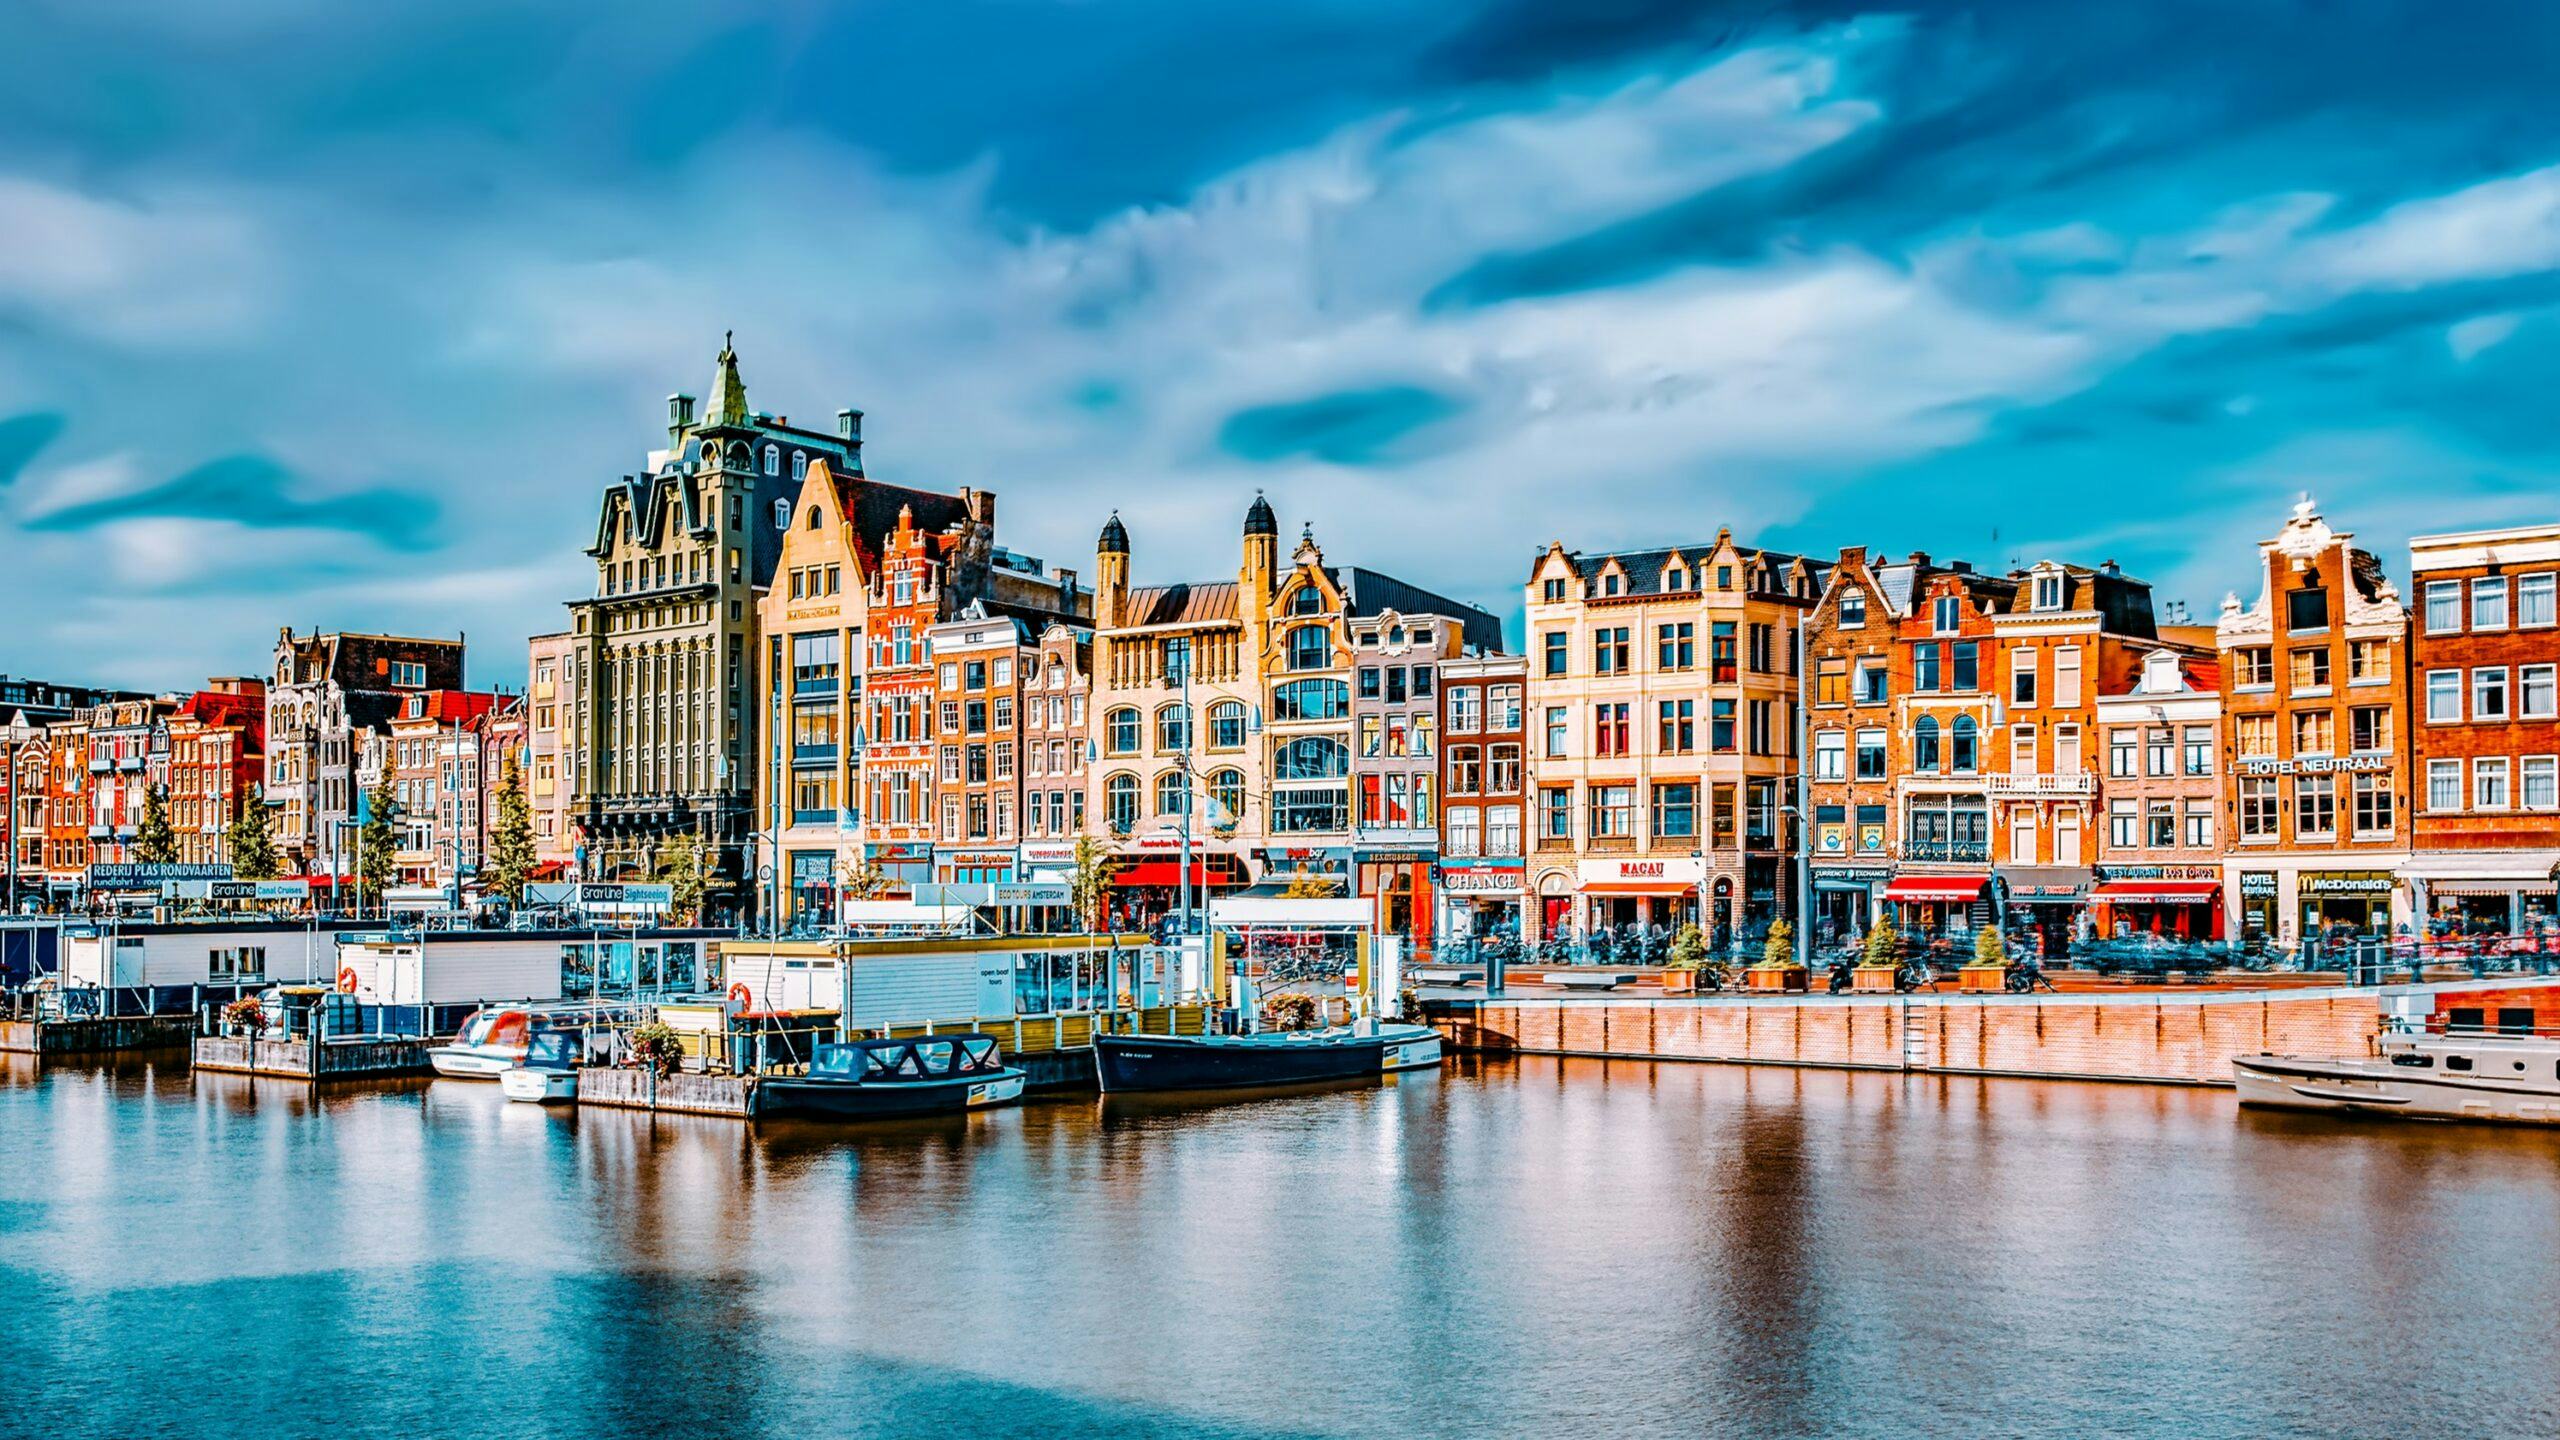 Makelaars: aanbod van woningen in Amsterdam daalt weer